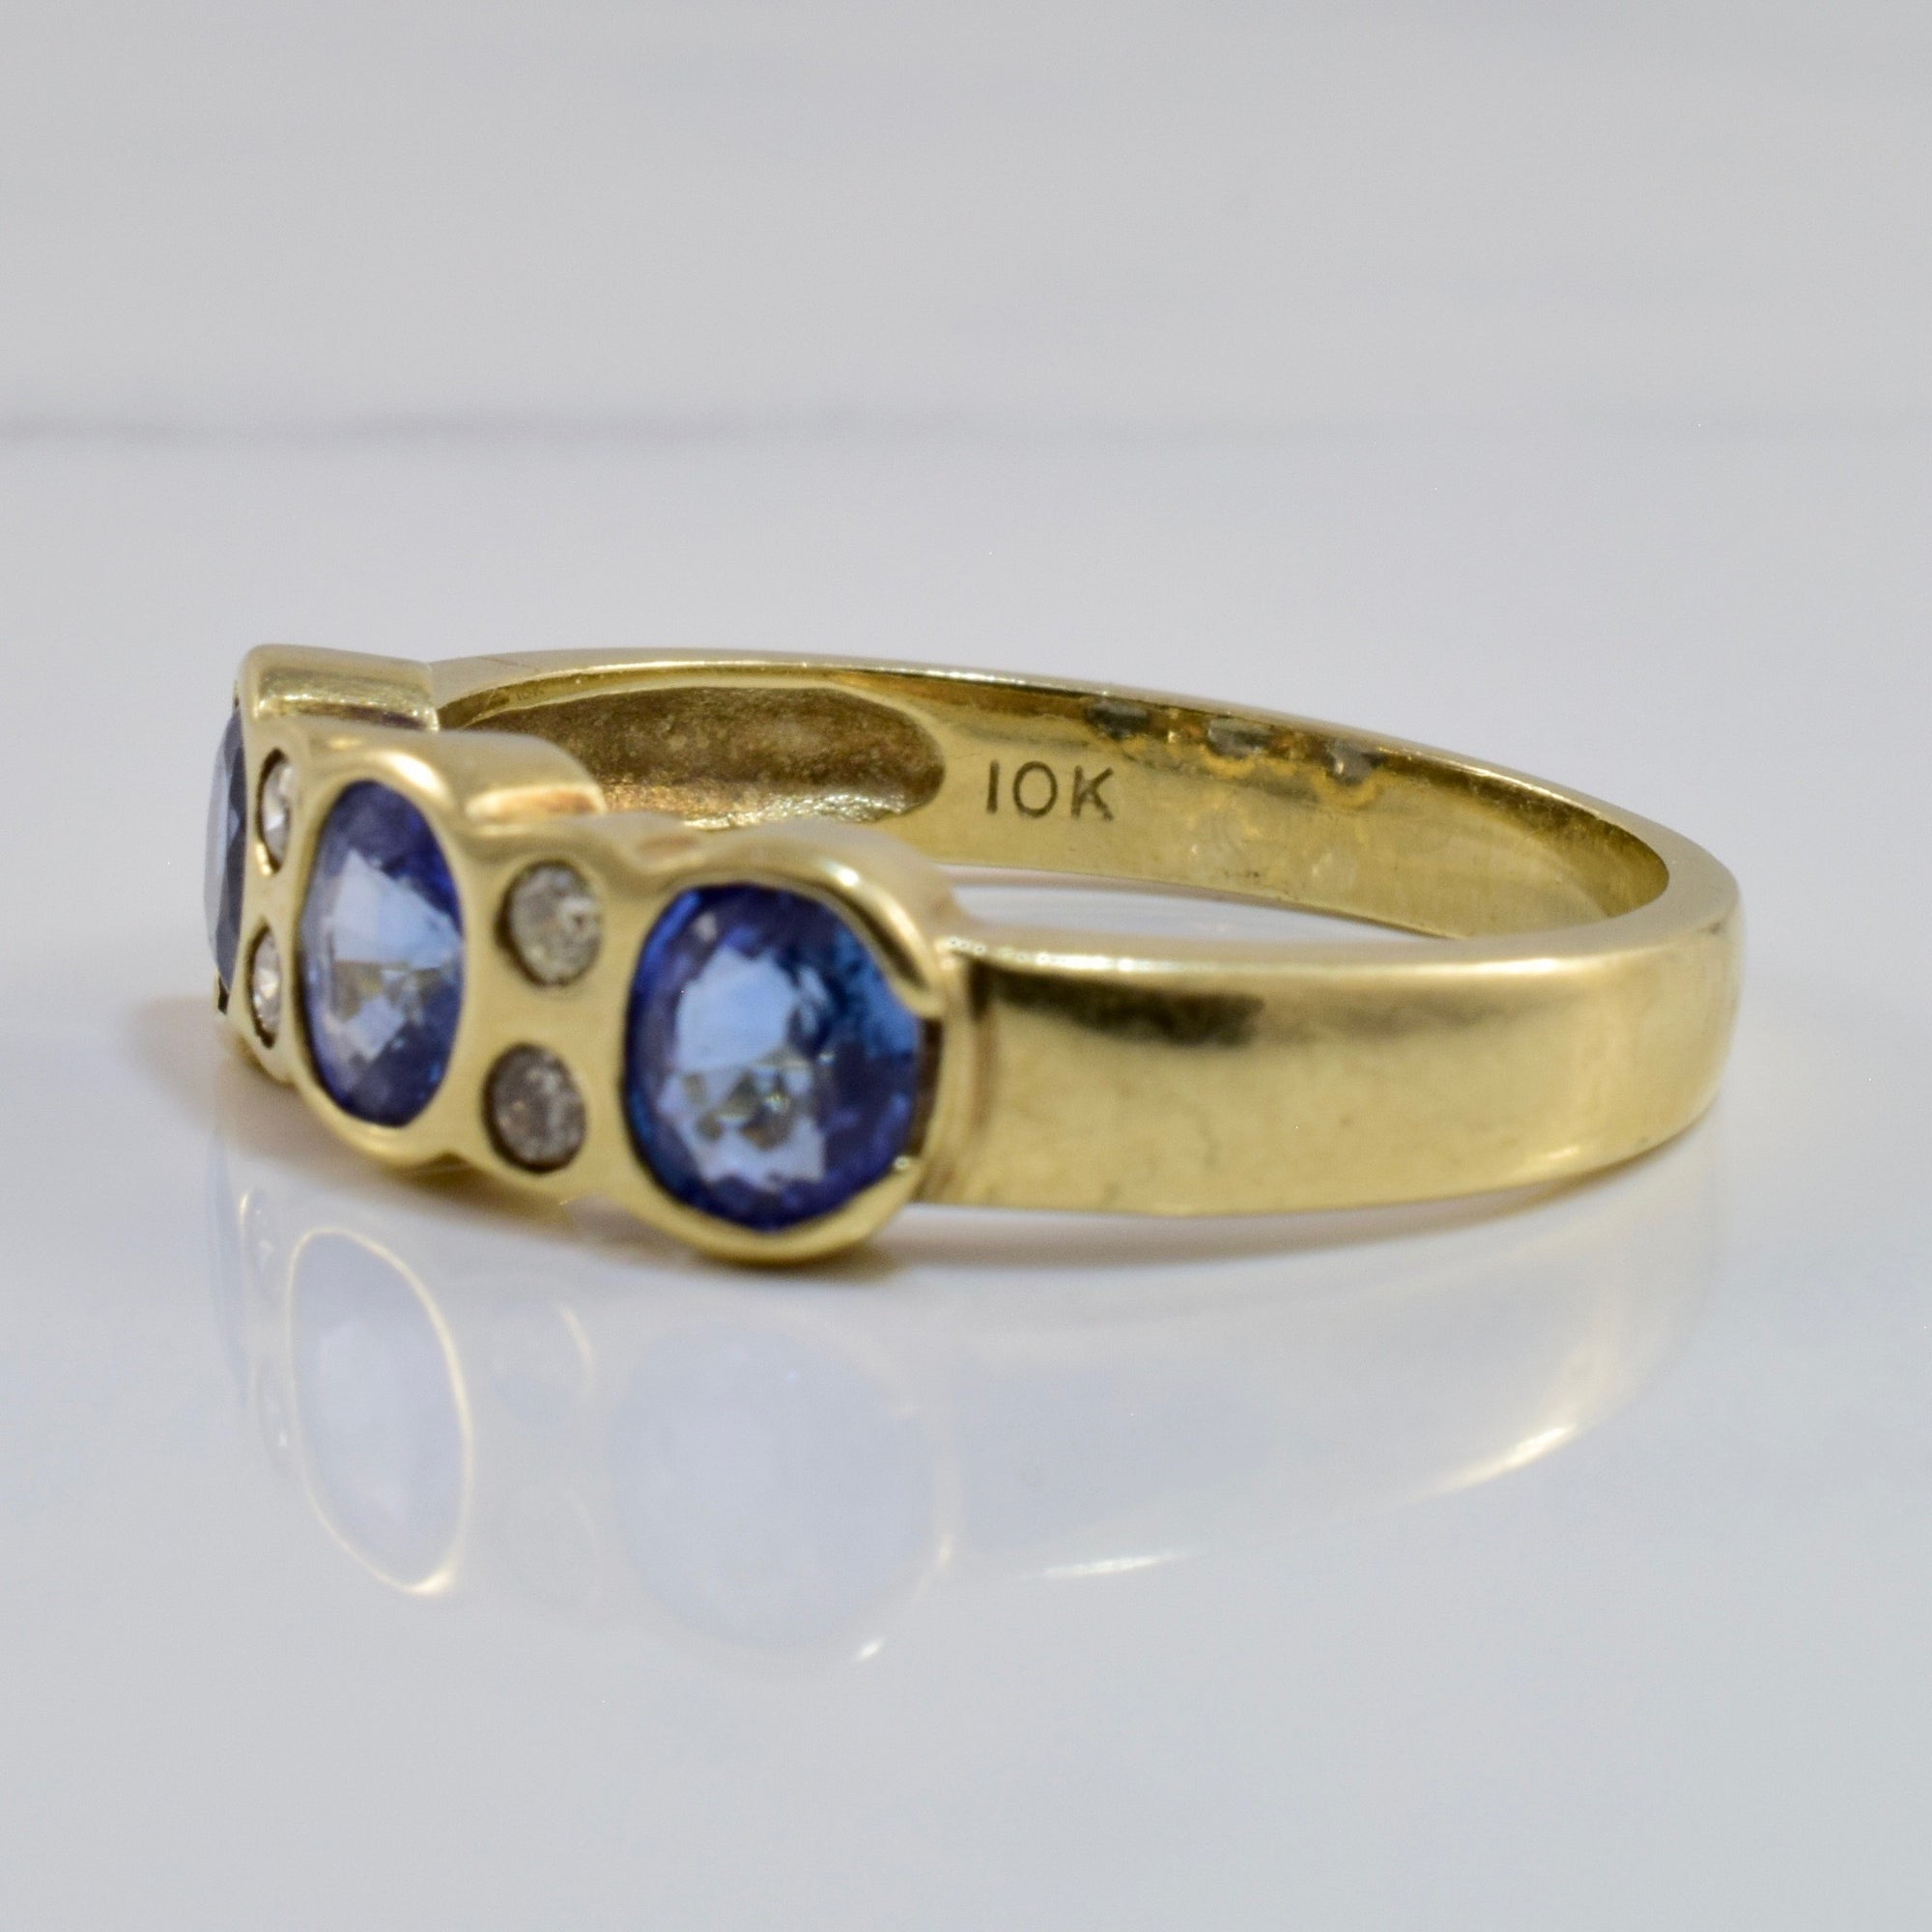 Bezel Set Sapphire and Diamond Ring | 0.08 ctw SZ 7.75 |